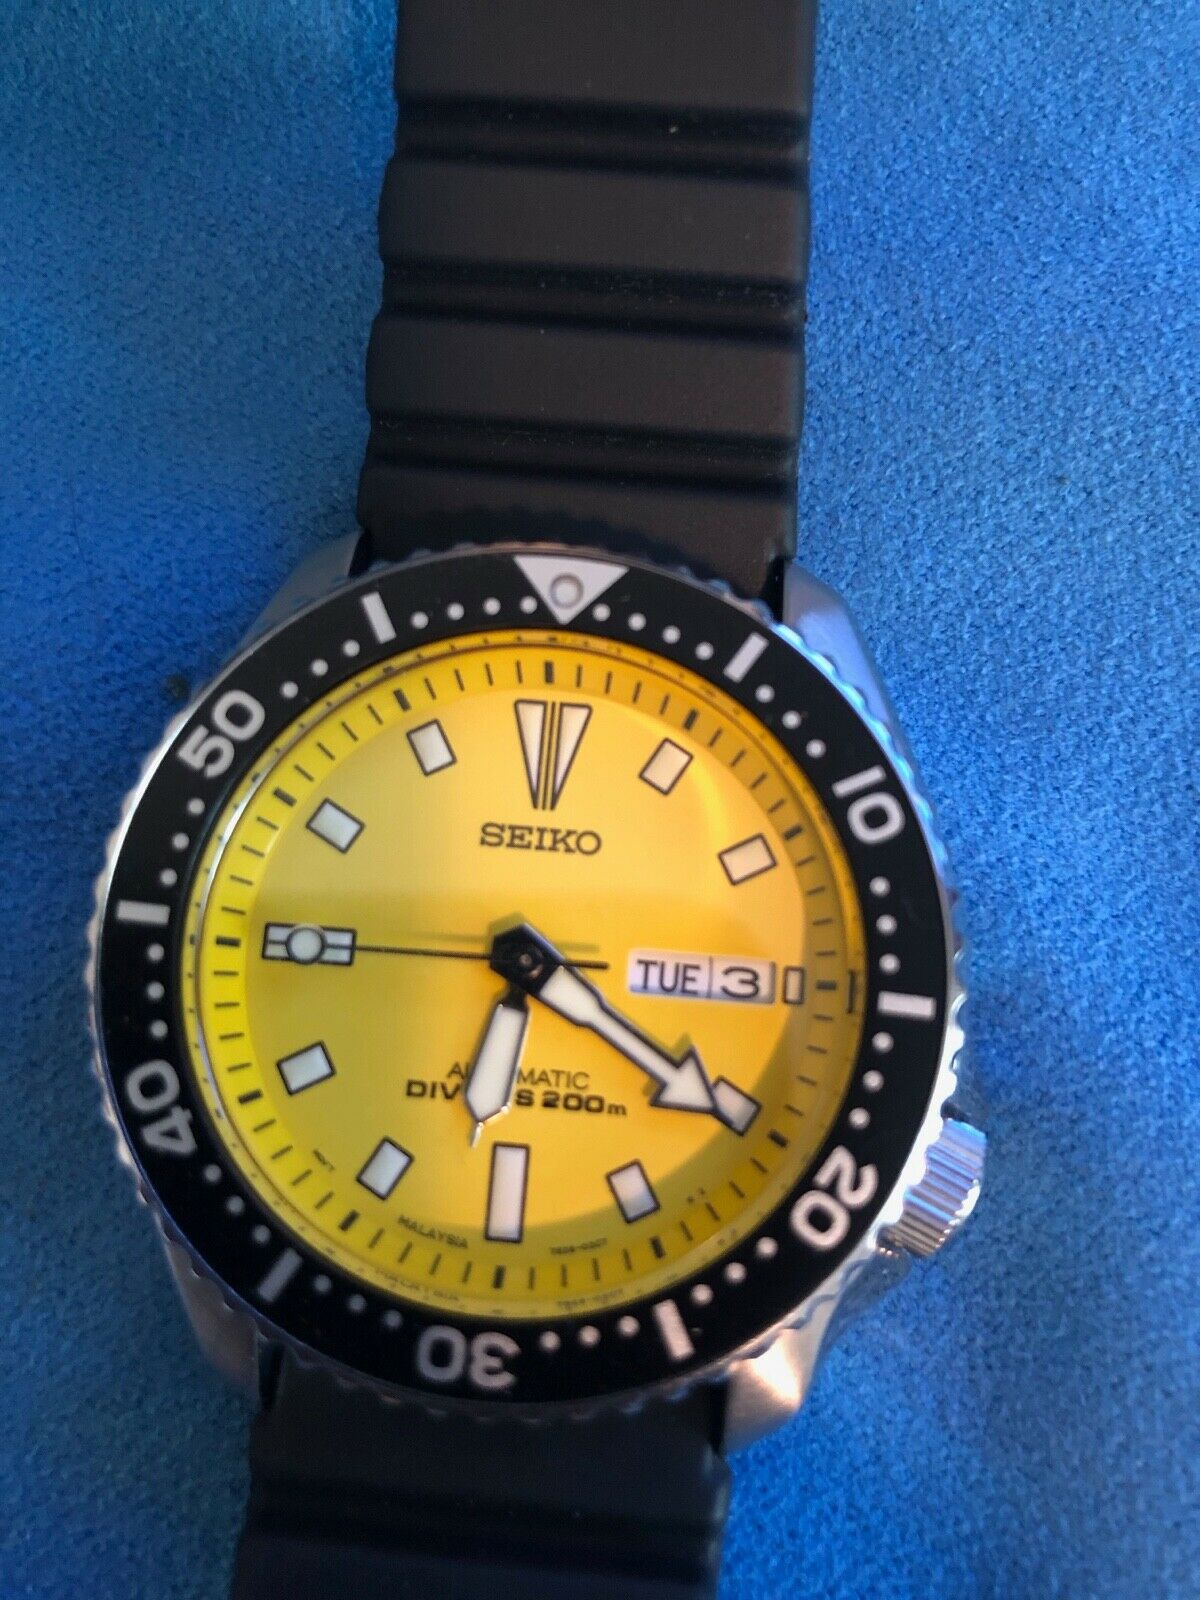 SKXA35 Automatic Diver's Watch 200m Yellow 7S26-02C7 MALAYSIA | WatchCharts